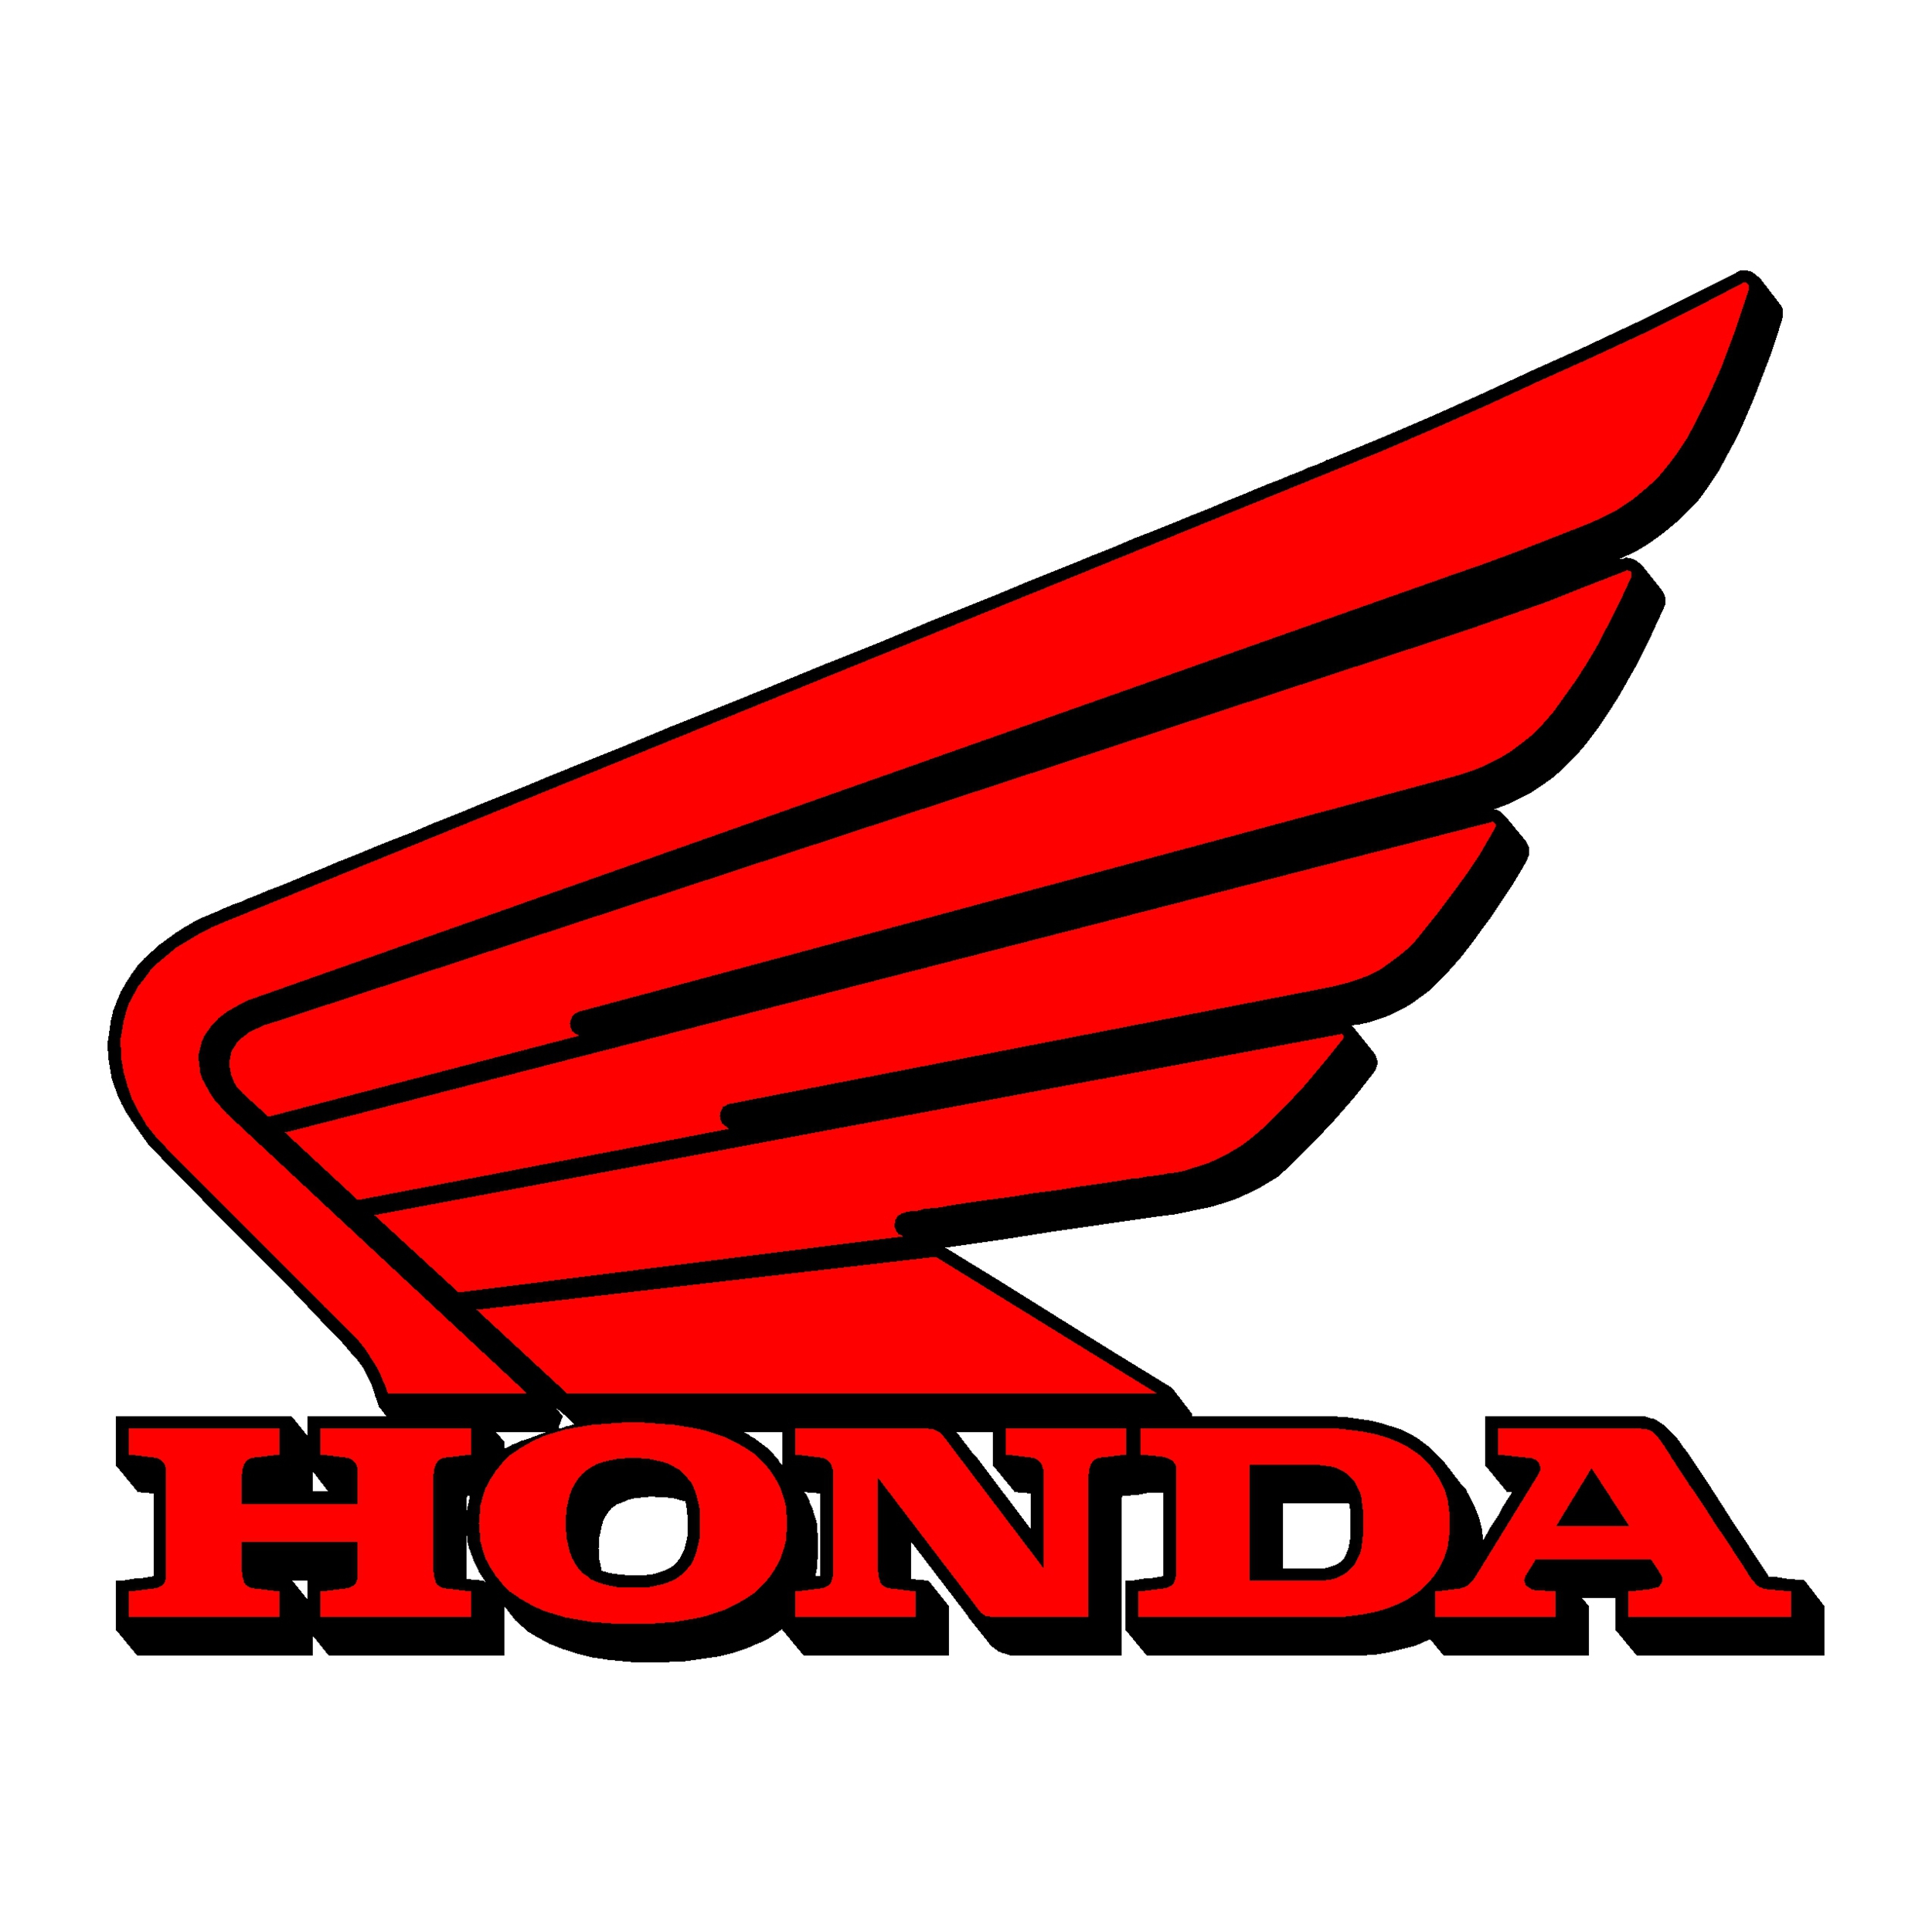 Stickers autocollants moto Honda Ailes